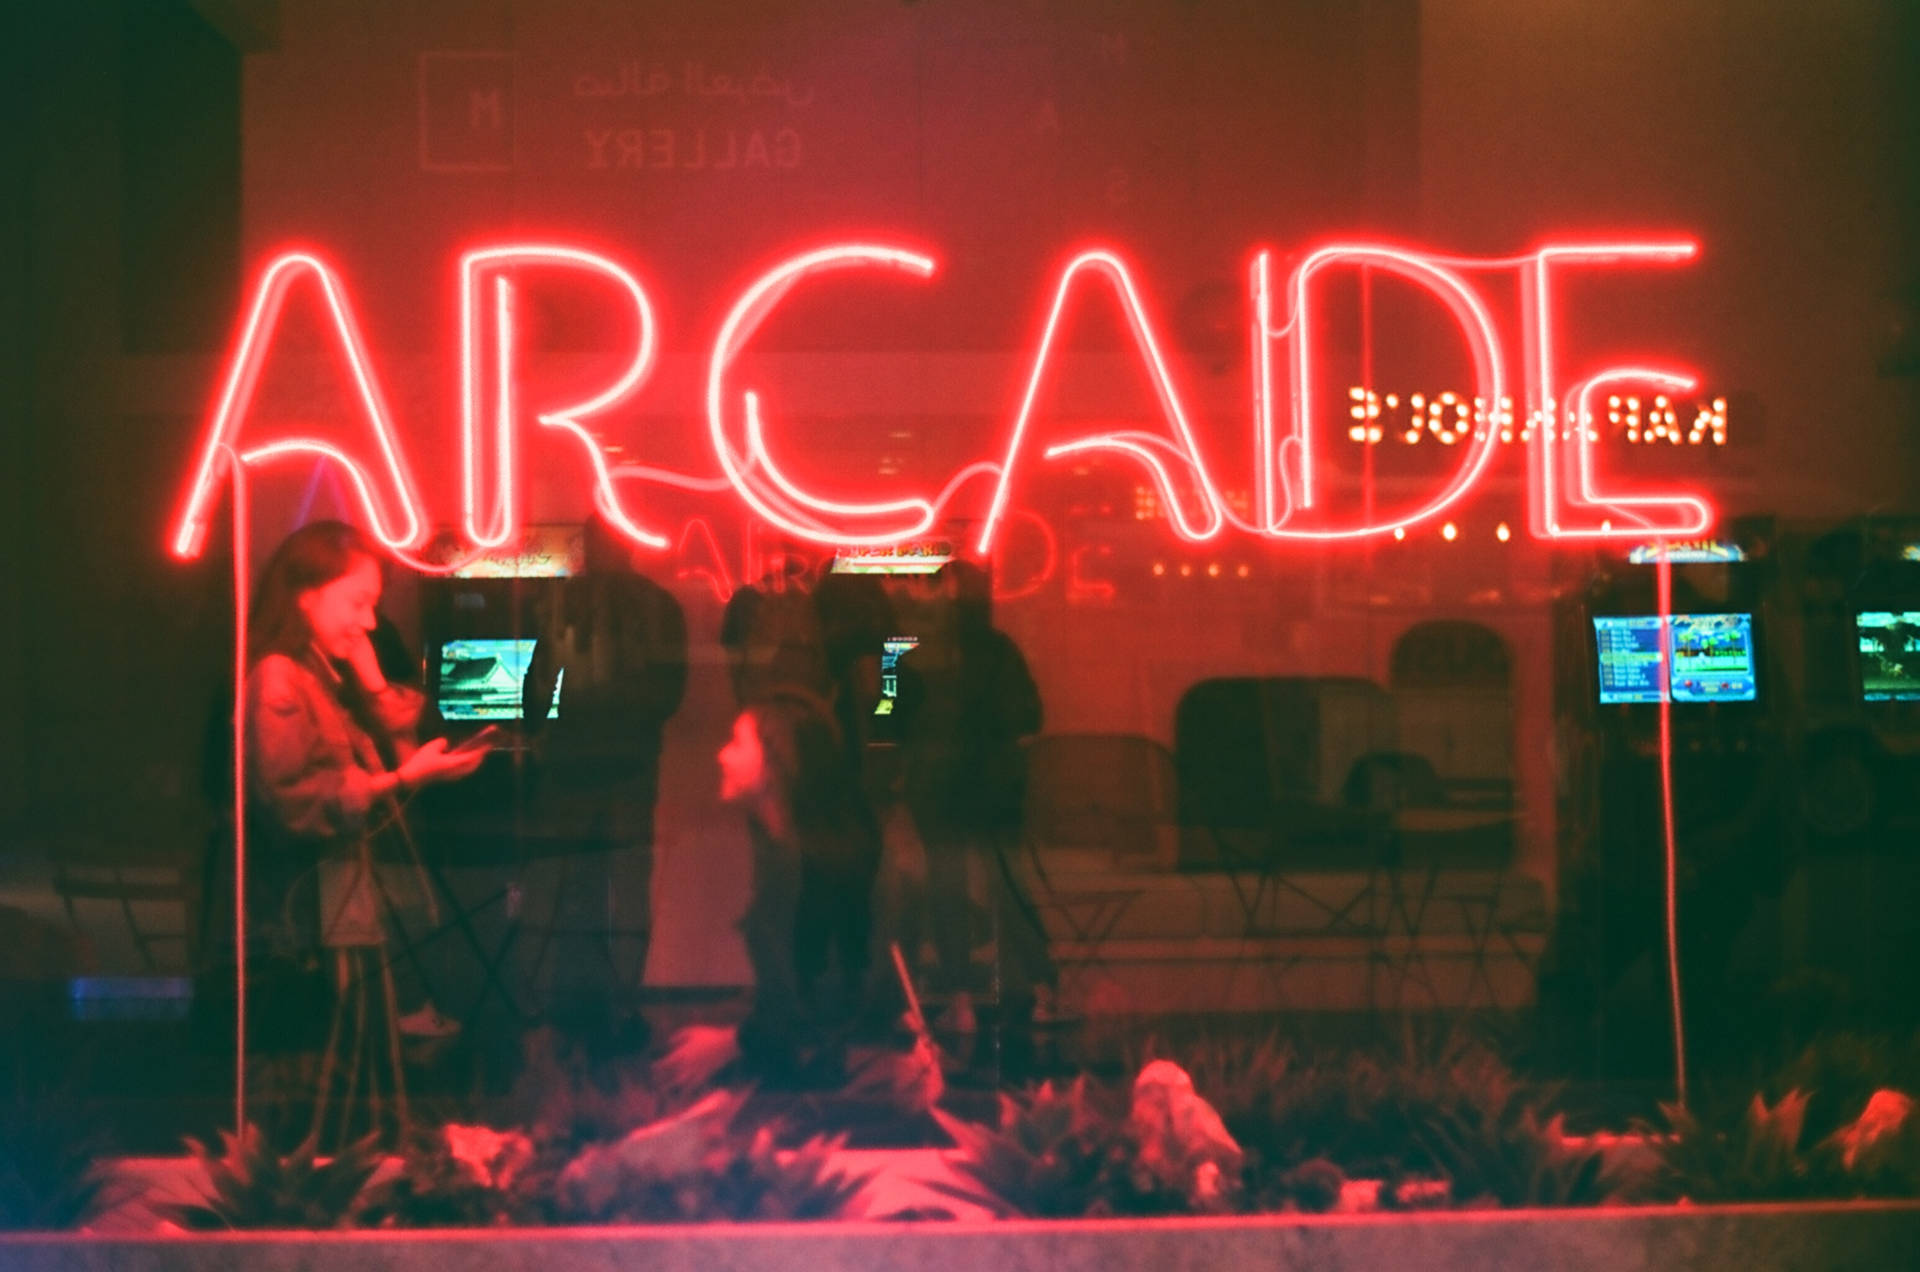 Arcade Neon Aesthetic Led Background